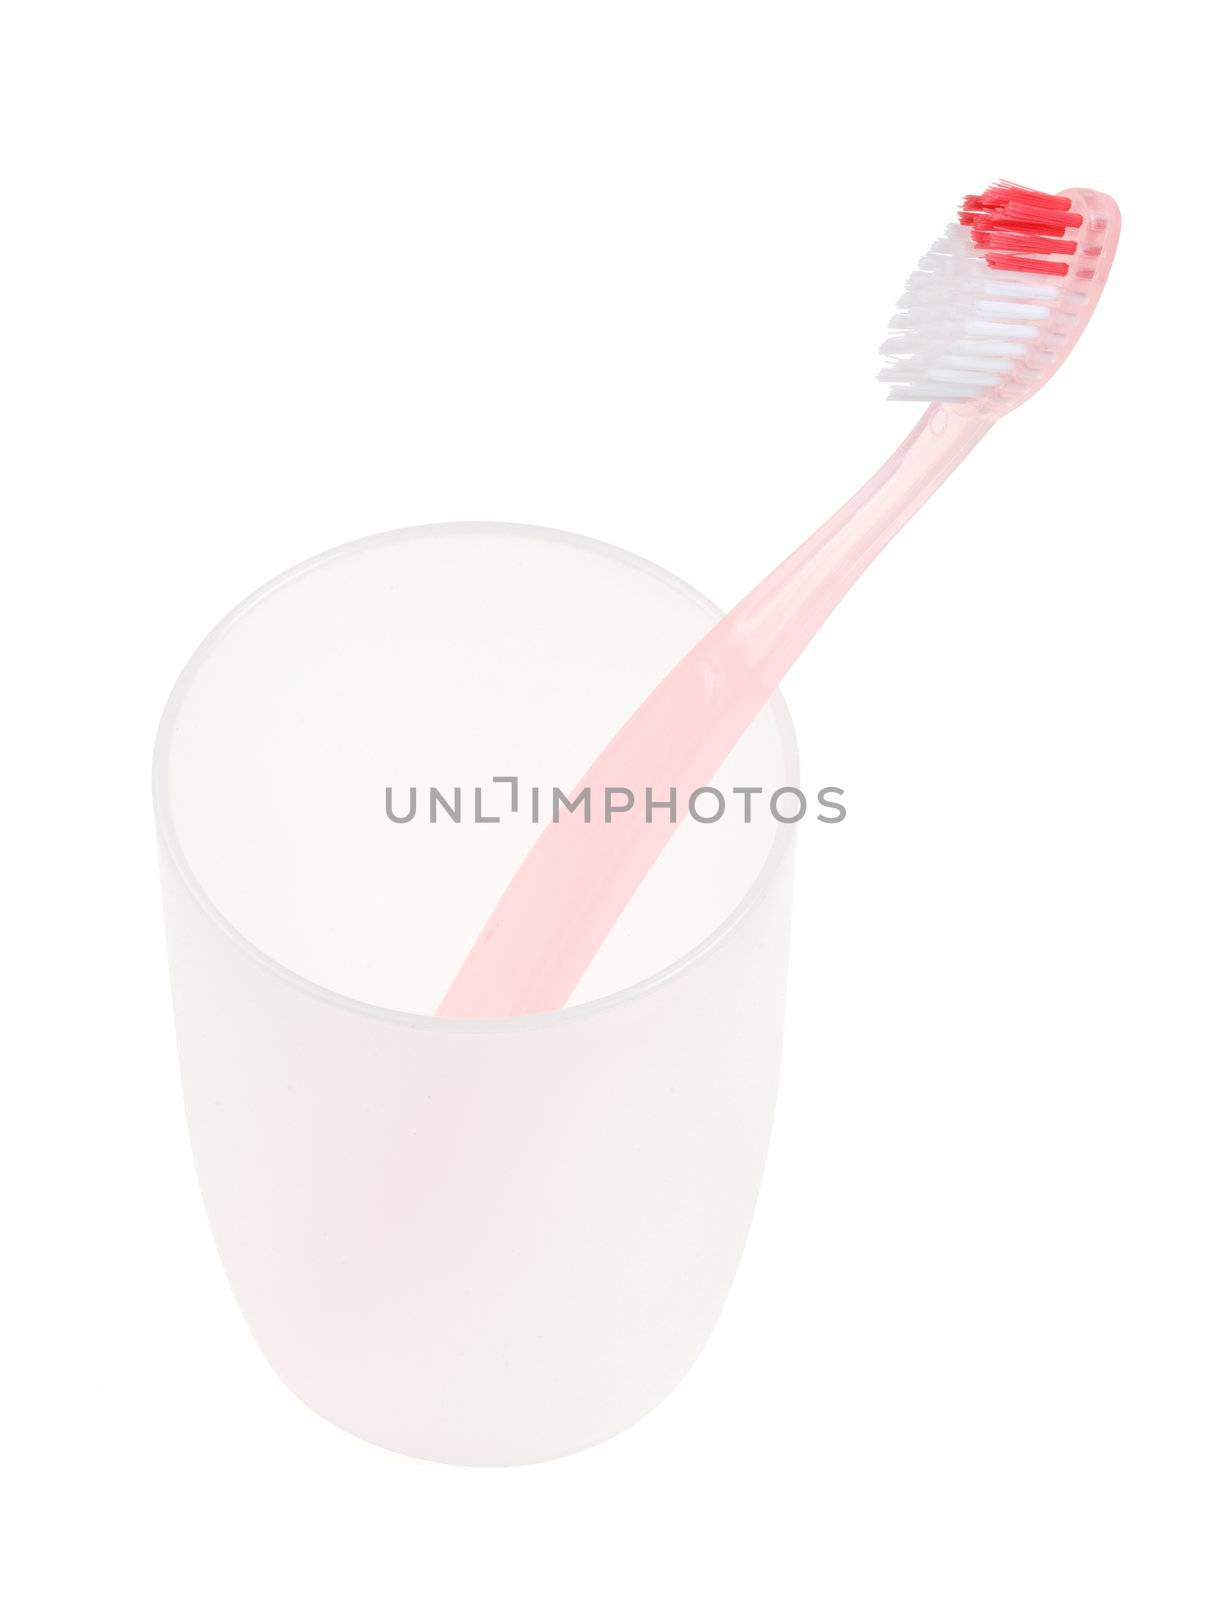 Toothbrush by fotoedgaras